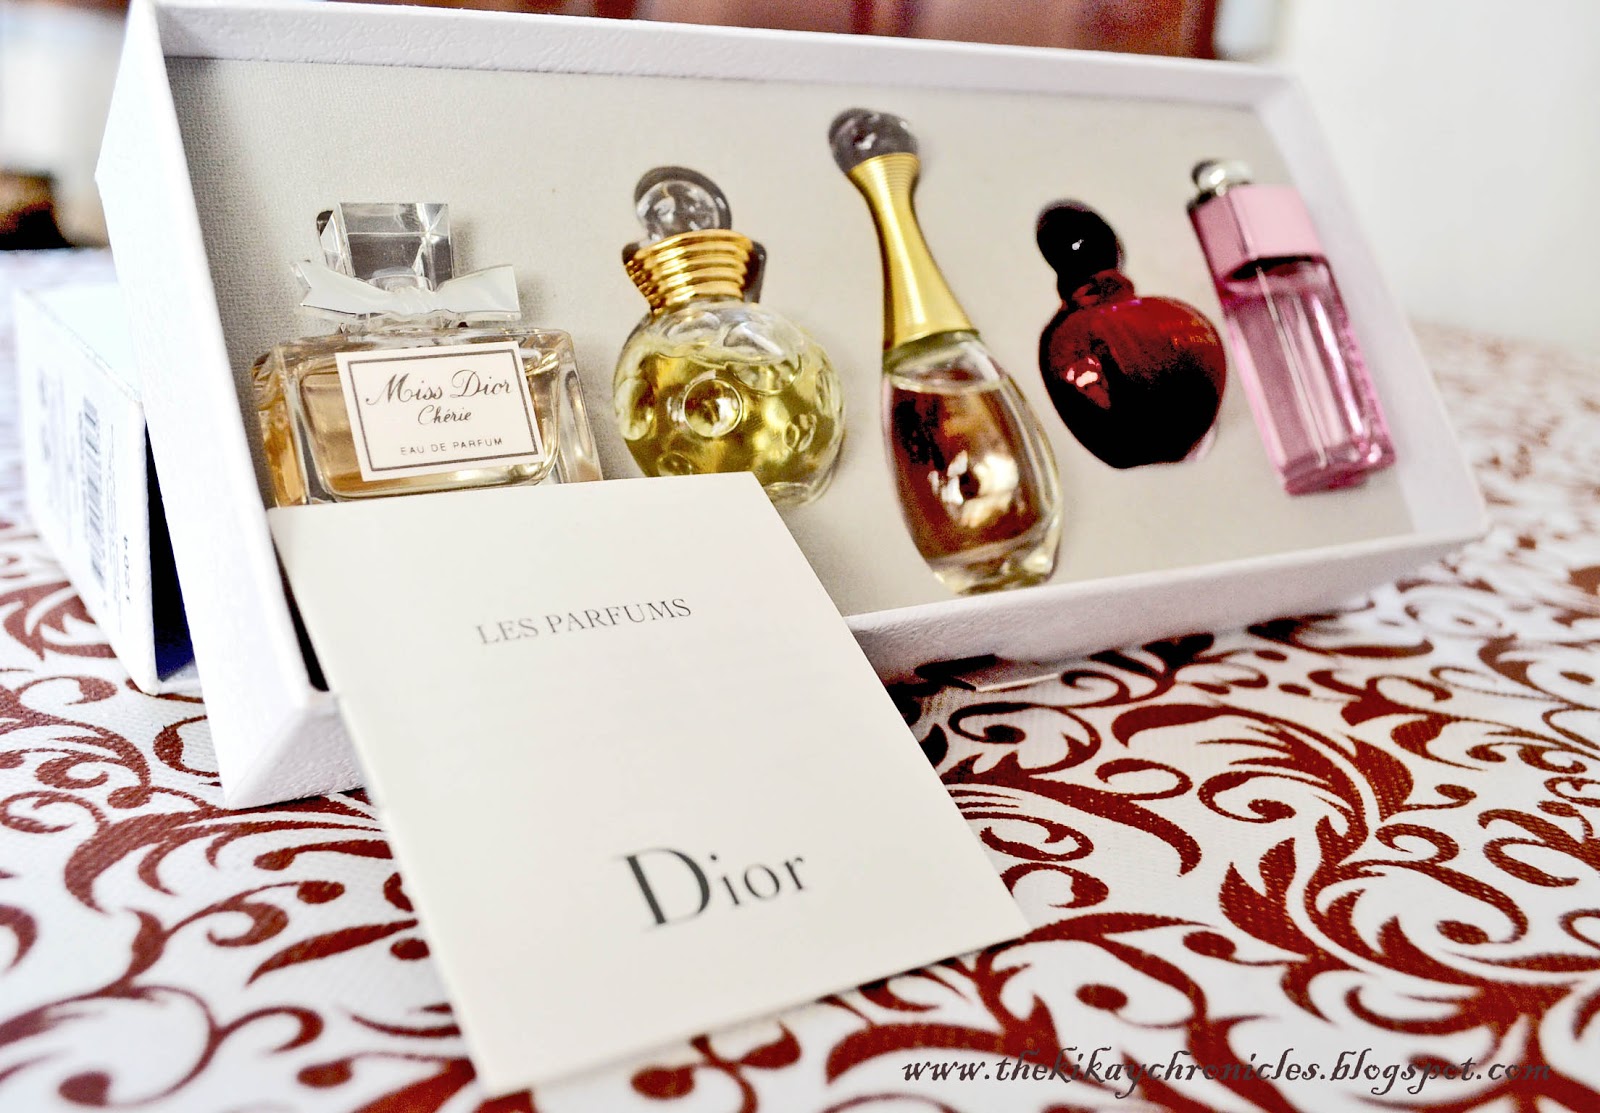 christian dior miniature perfume gift sets